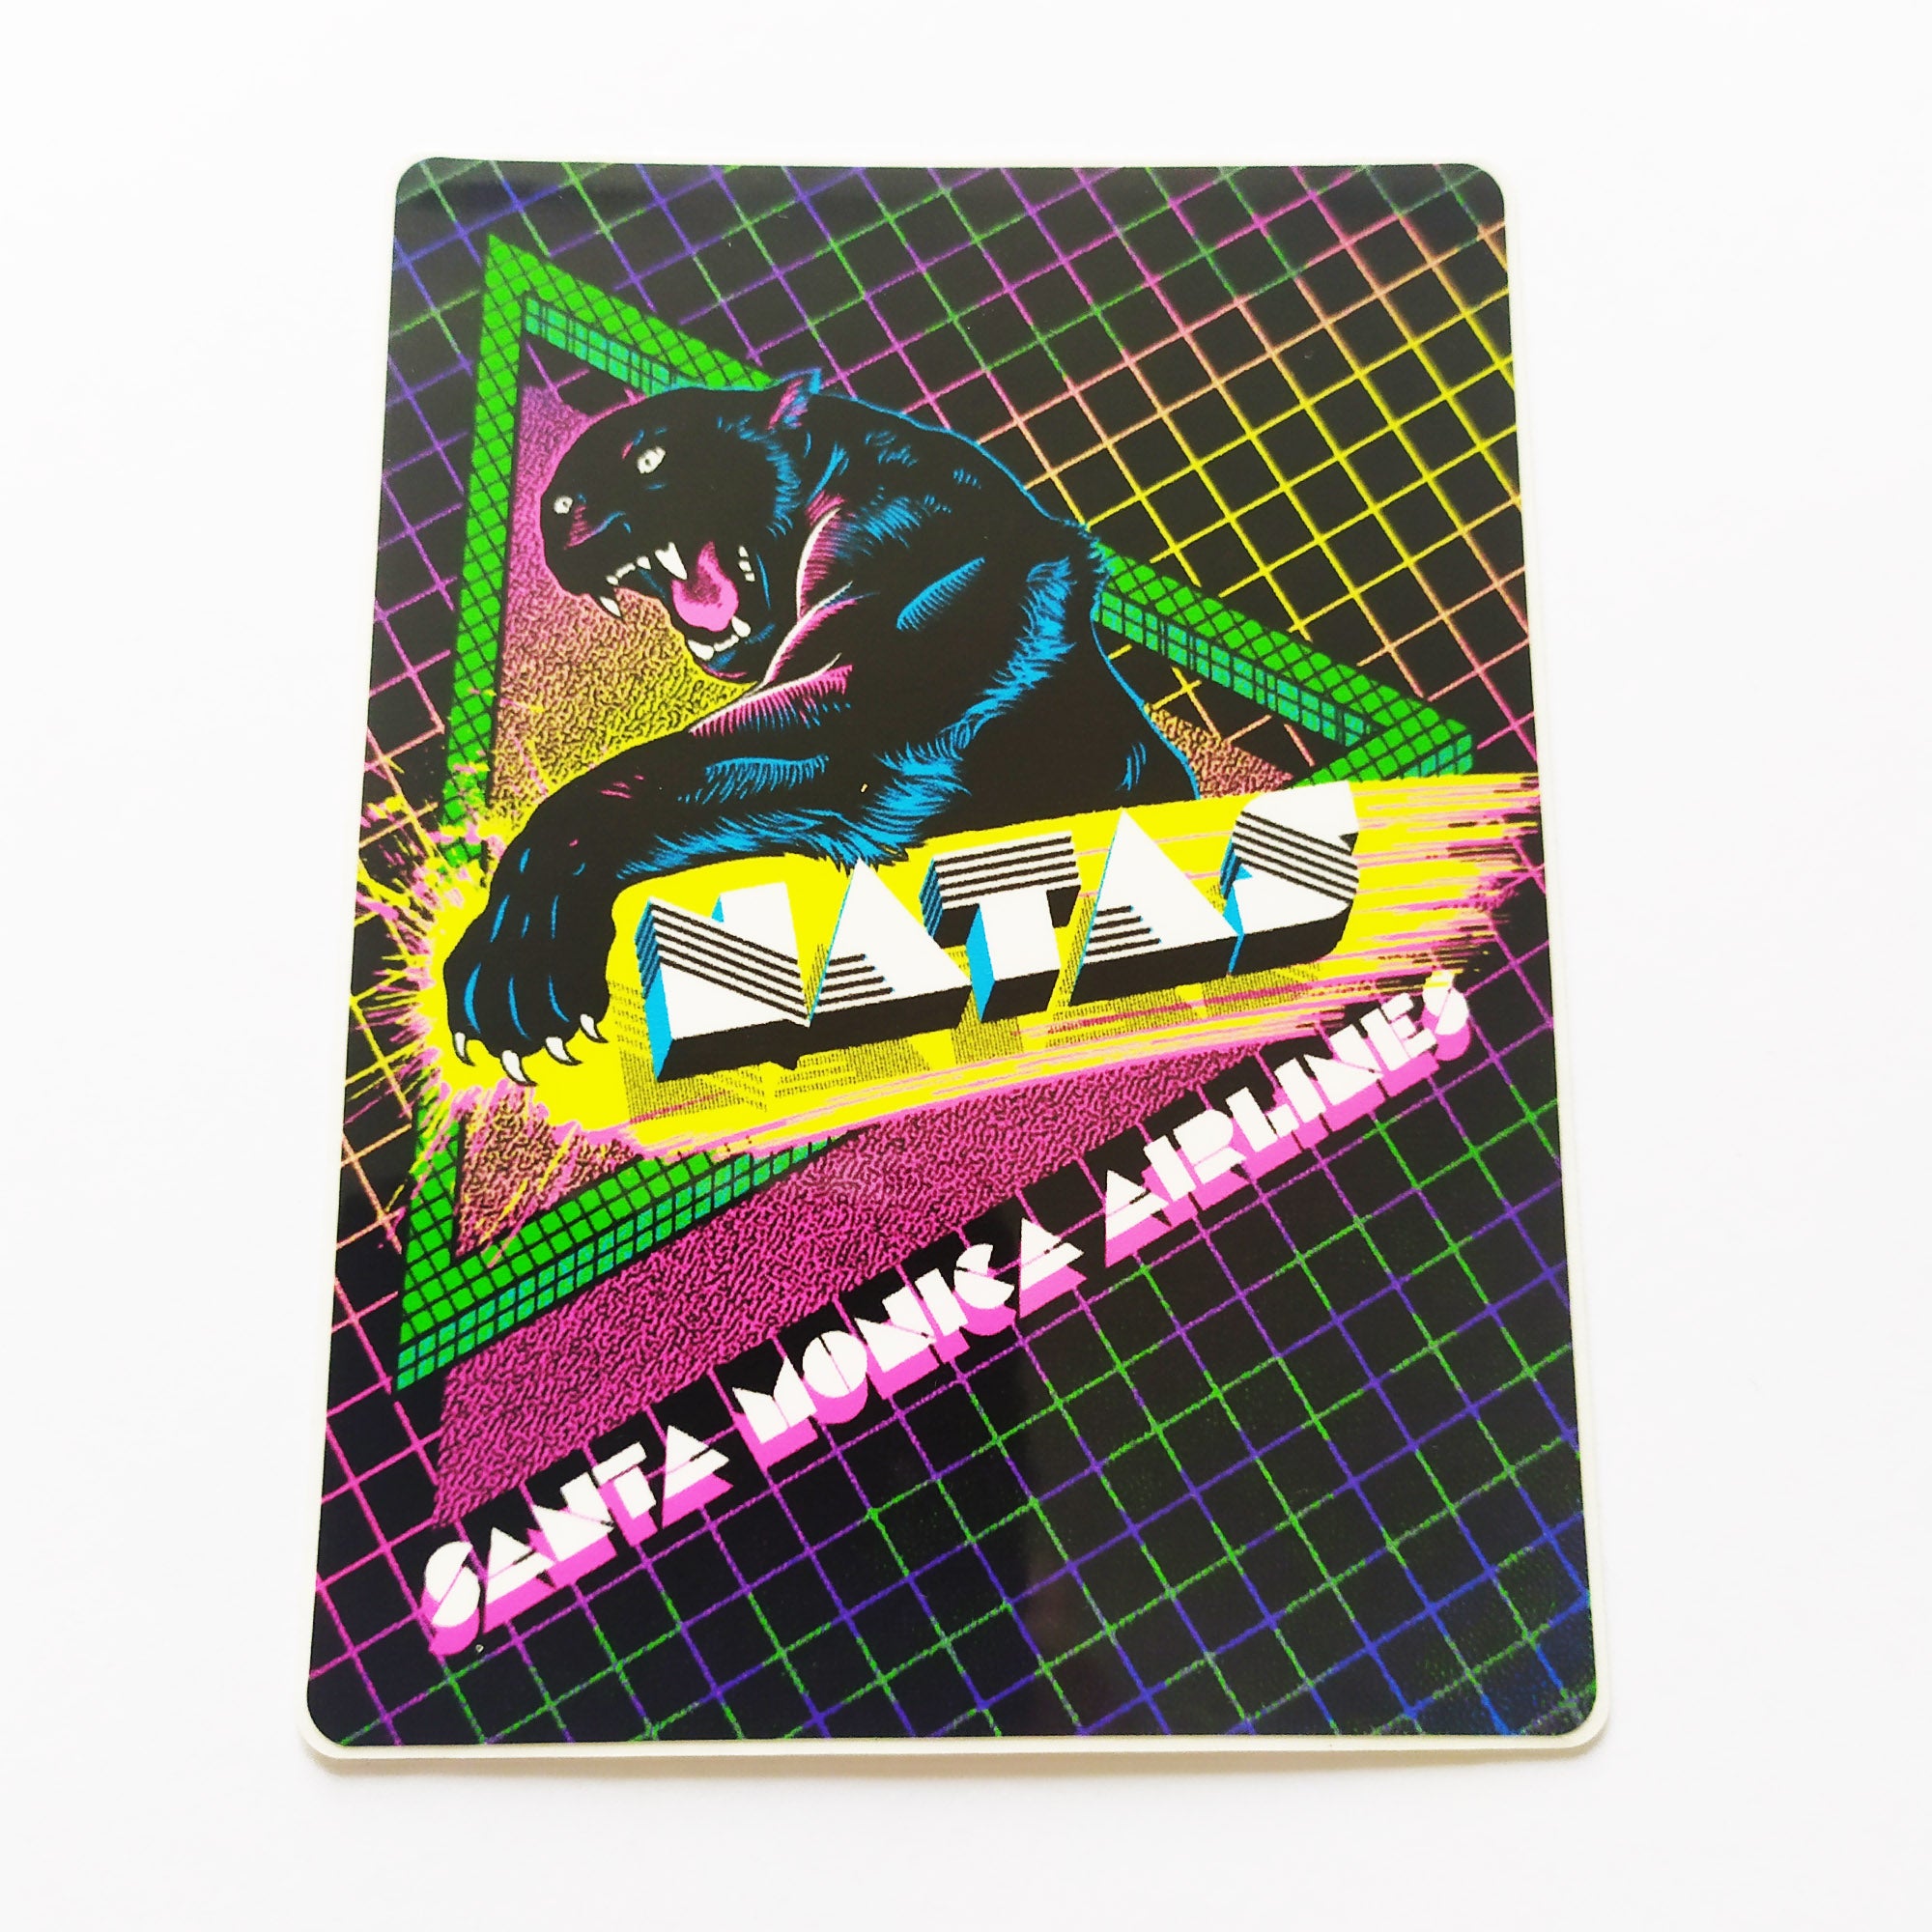 Santa Monica Airlines - Natas Kaupas Panther Skateboard Sticker